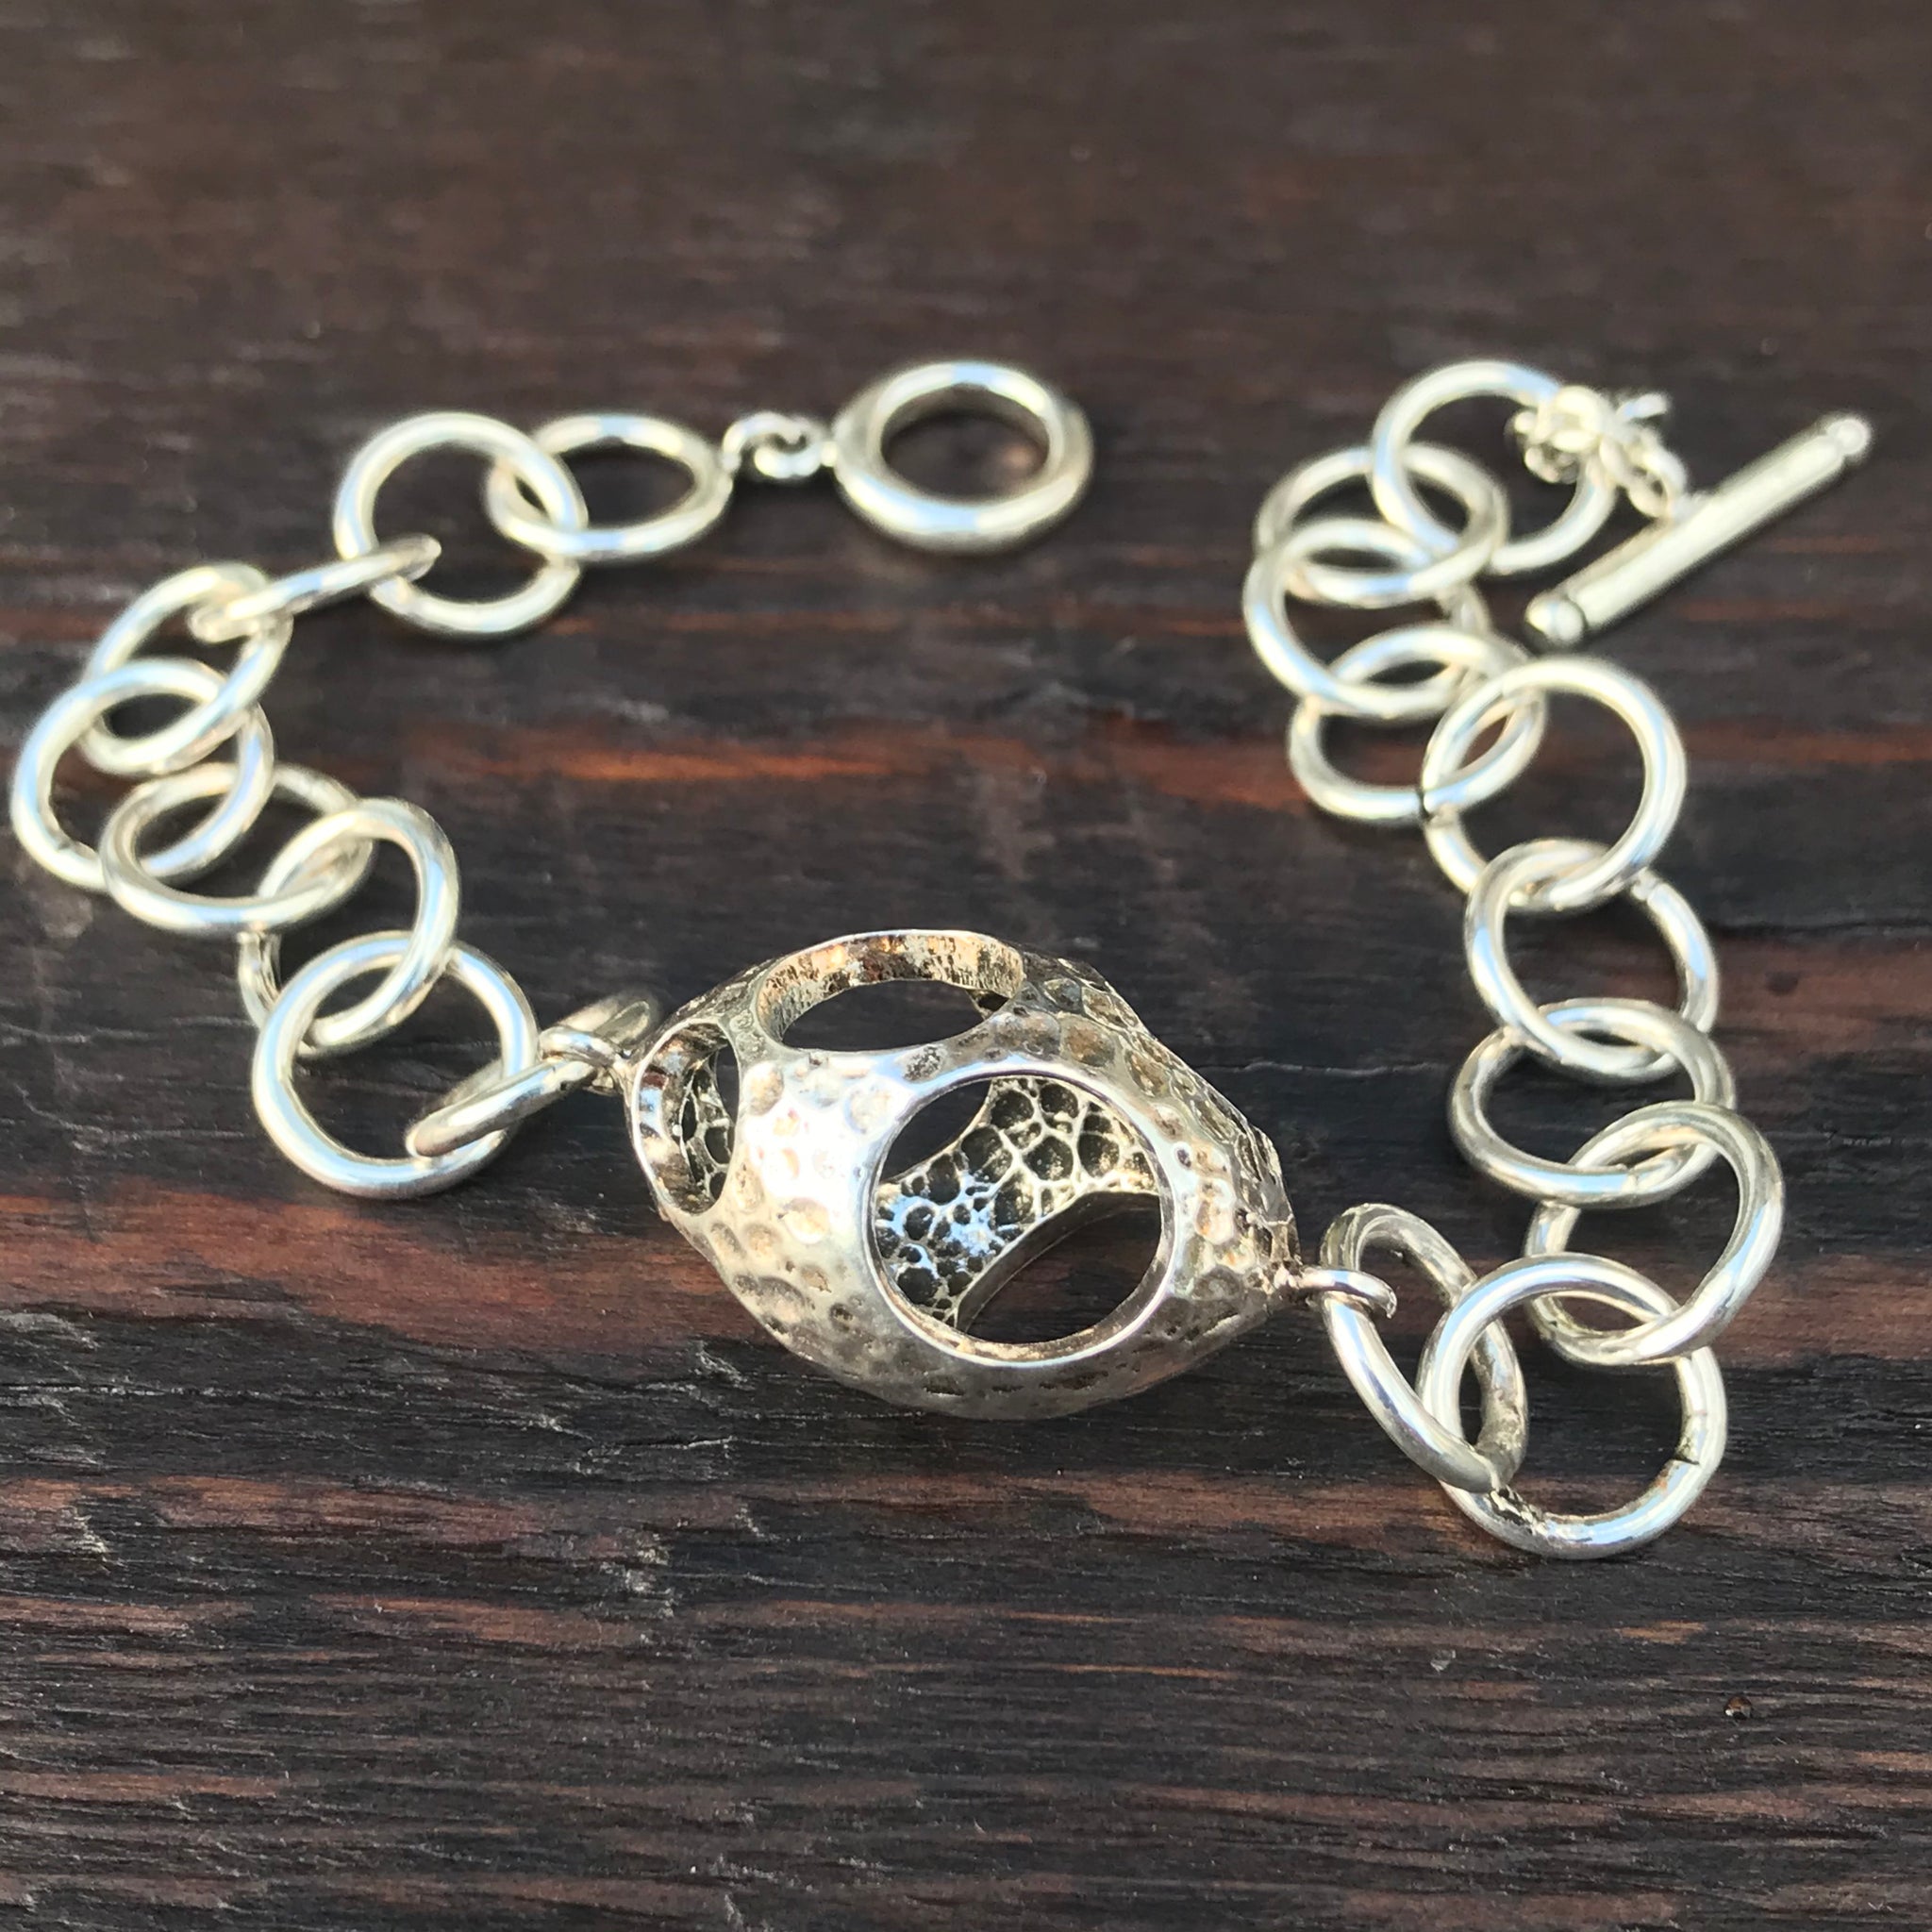 Ovoid & Chain Bracelet - Stunning Unique Sterling Silver Bracelet